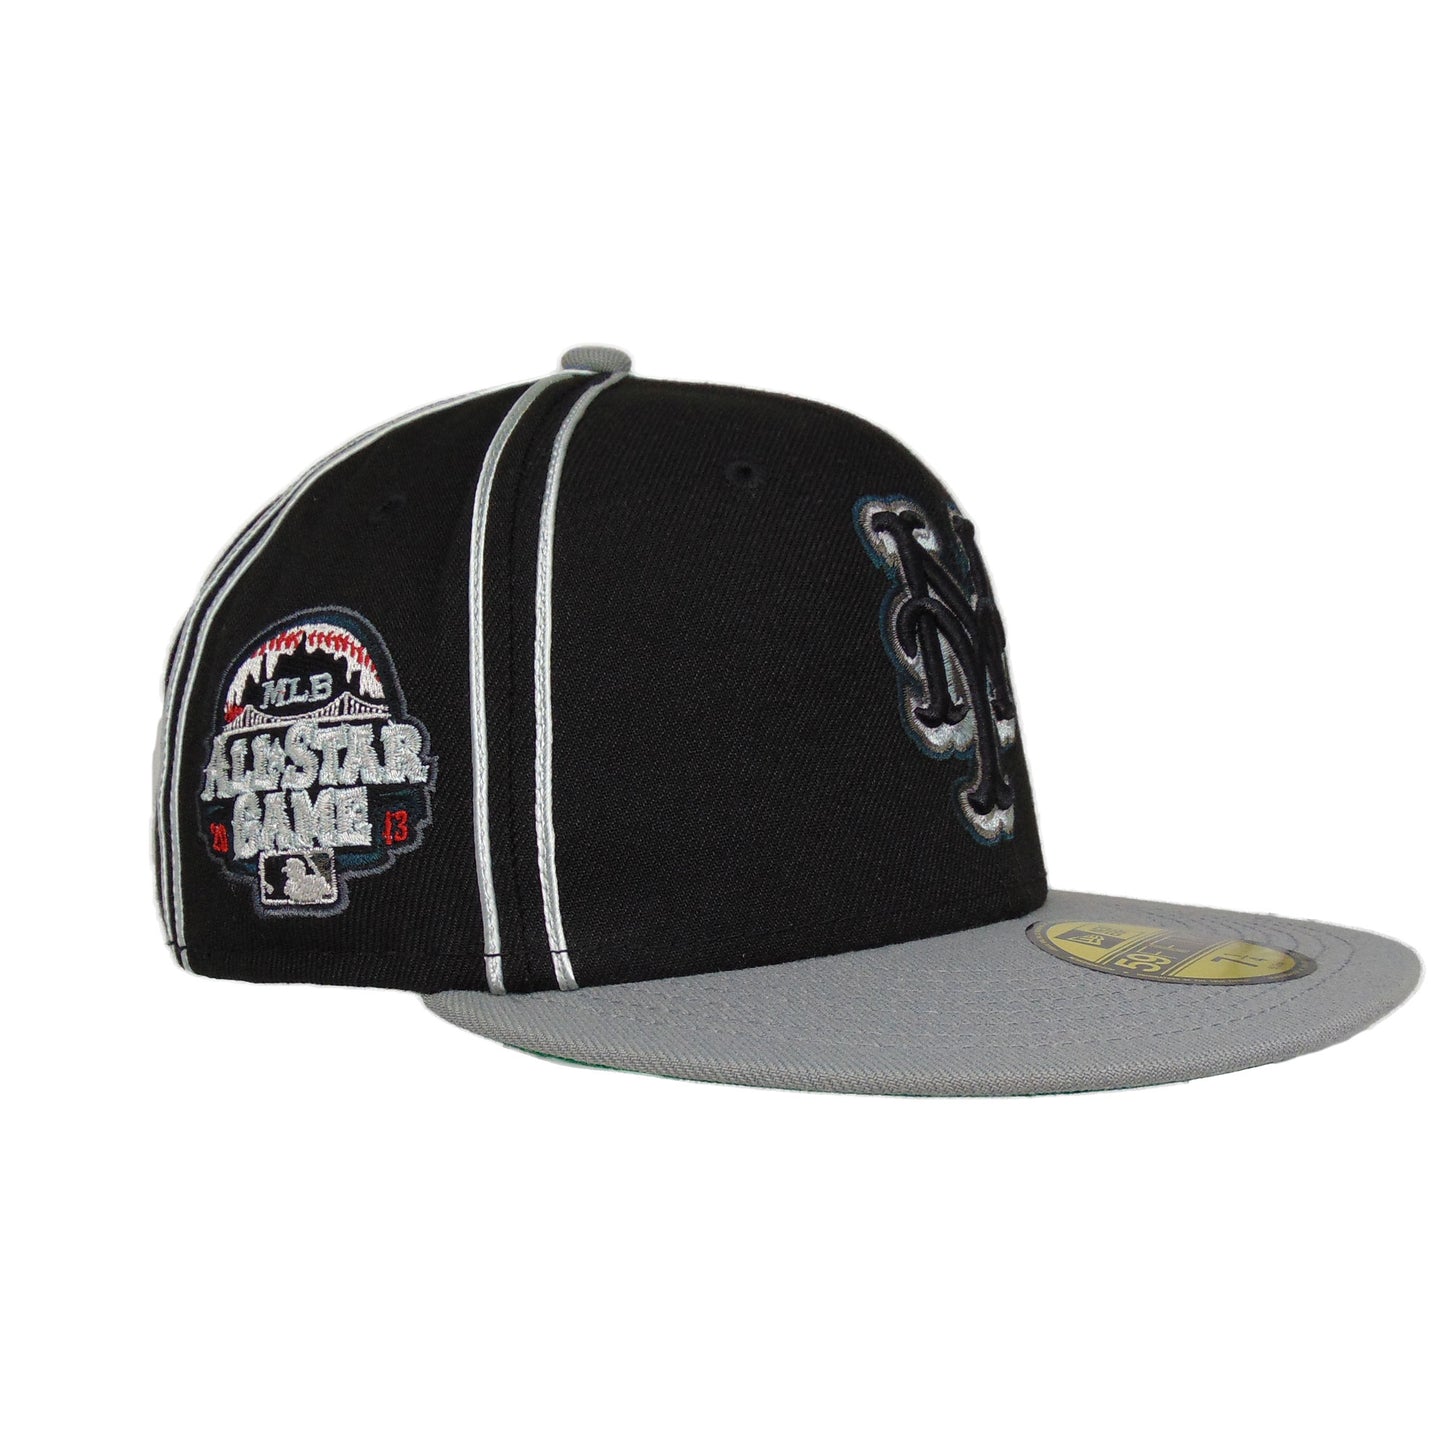 New York Mets Custom New Era 59FIFTY Cap Black Silver